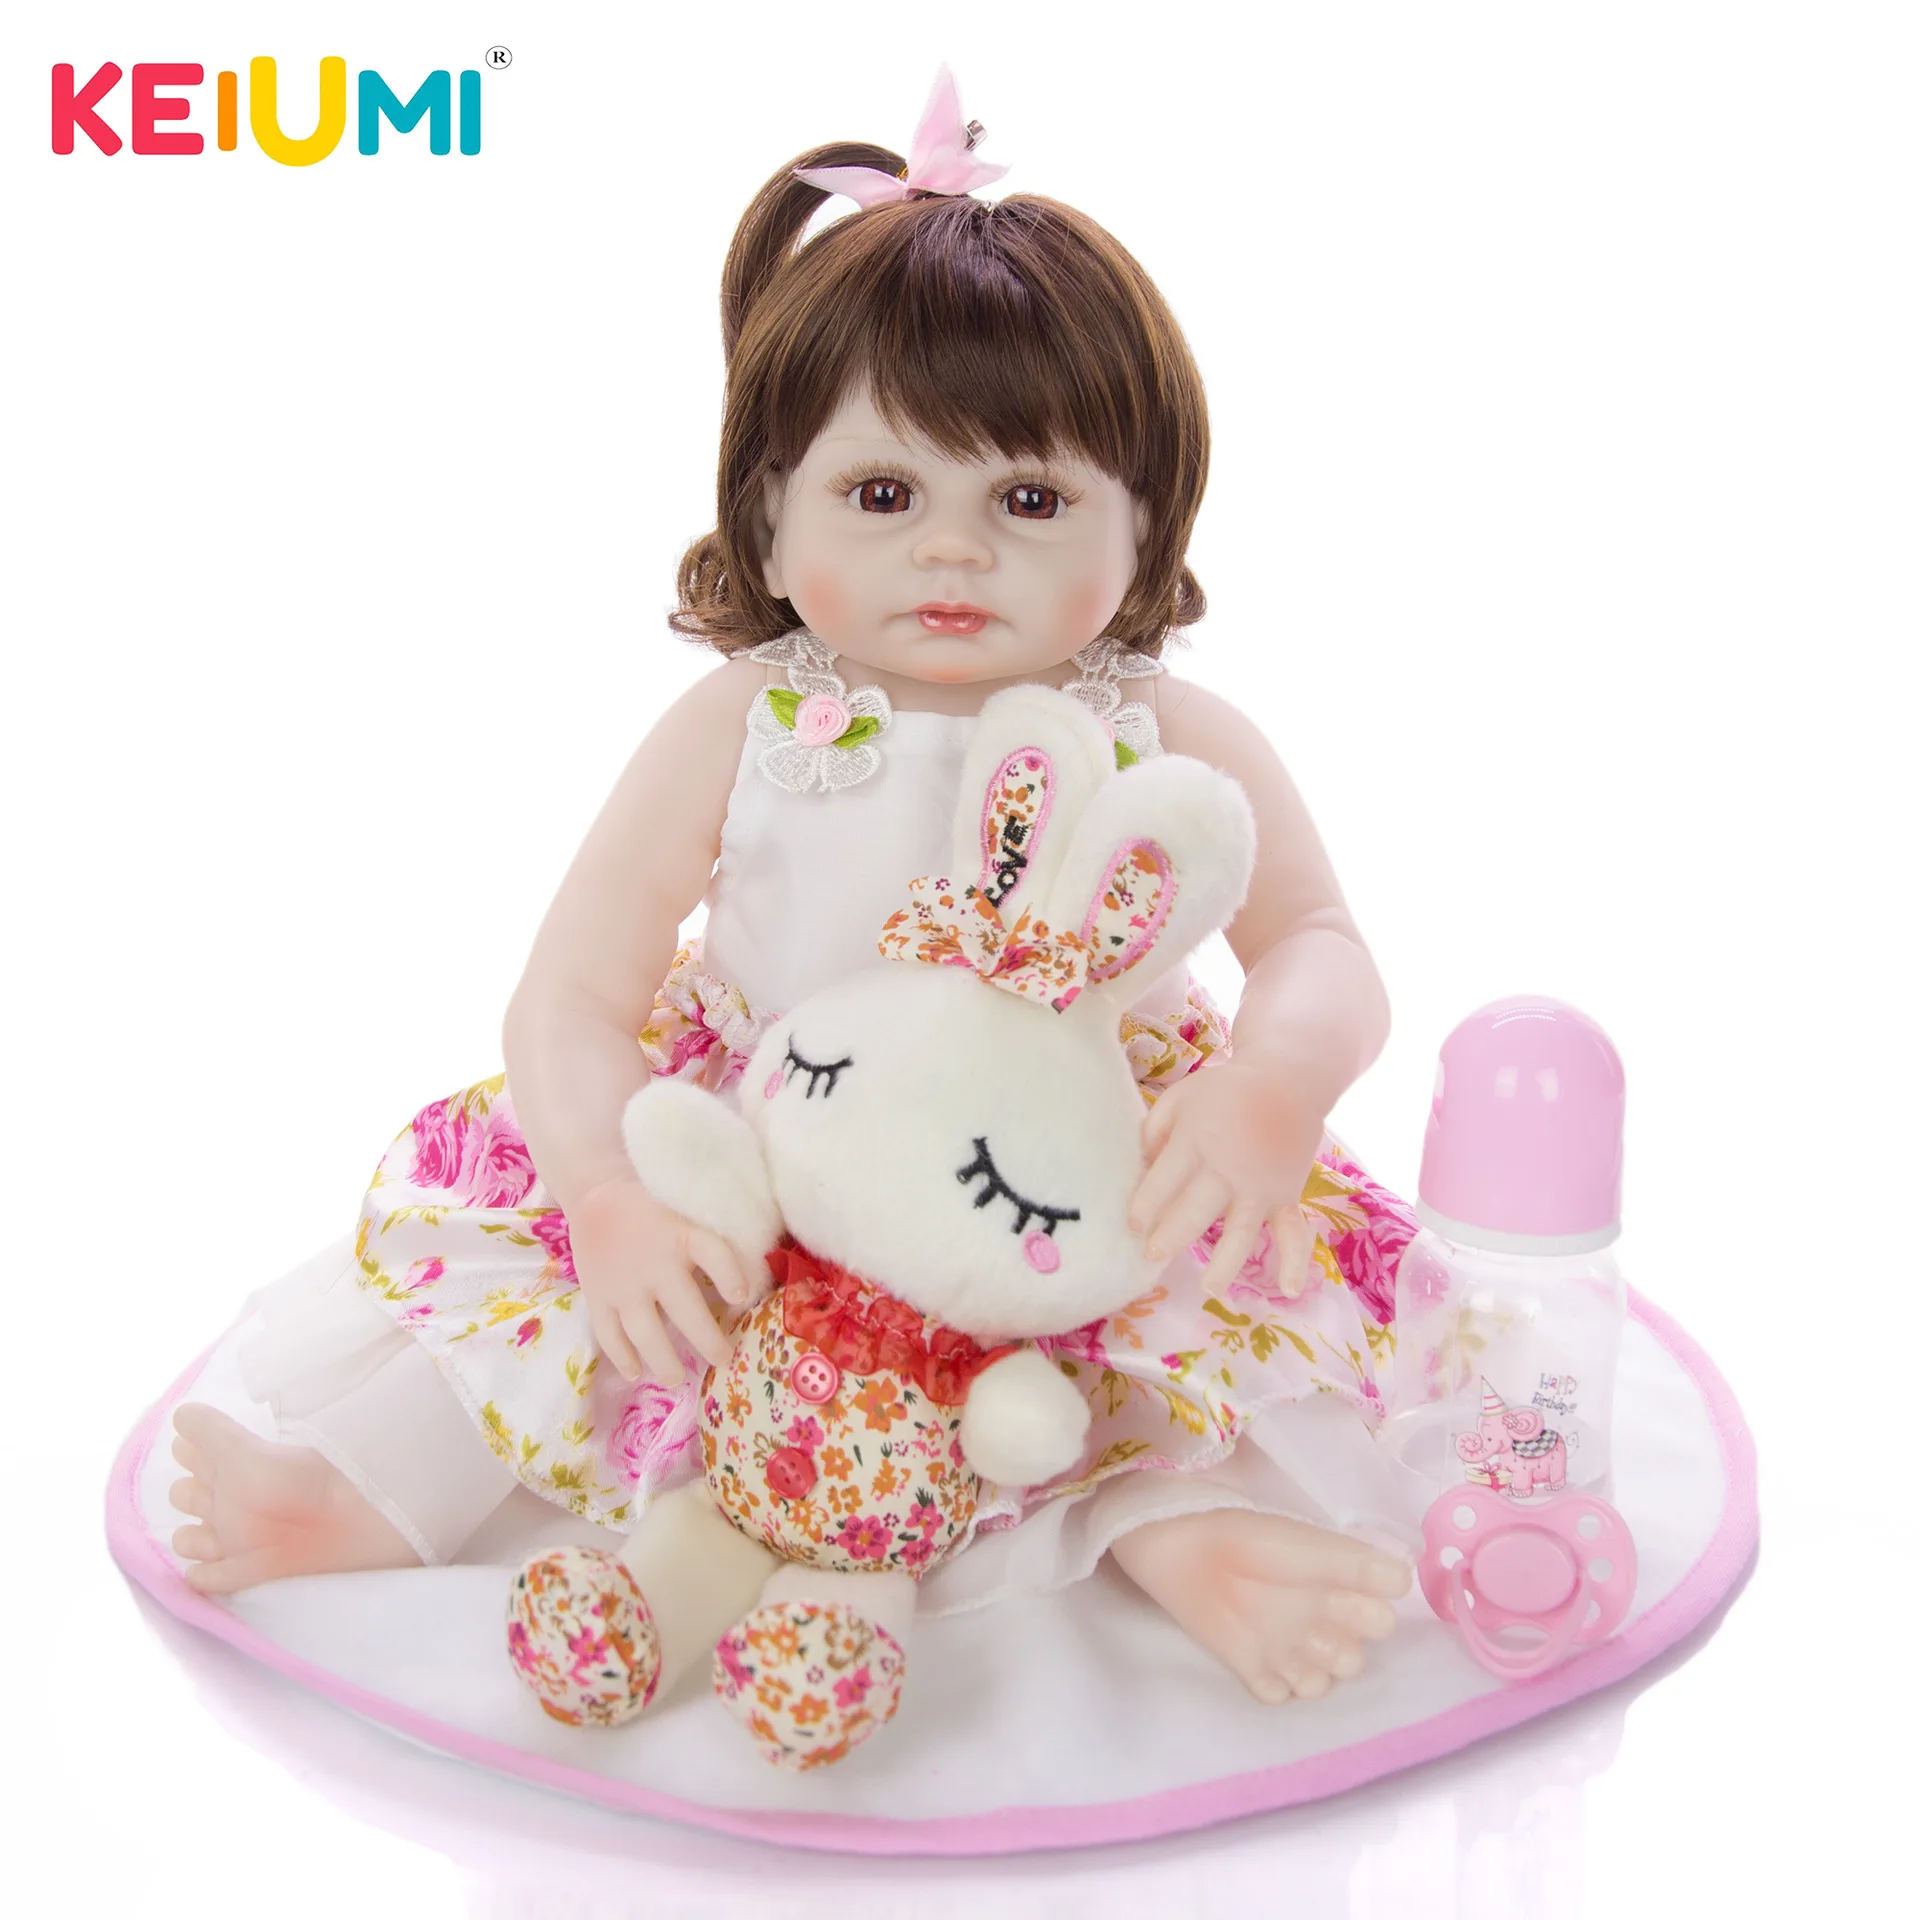  Keiumi AliExpress Hot Selling 19-Inch Reborn Baby Doll Model Infant Reborn Baby